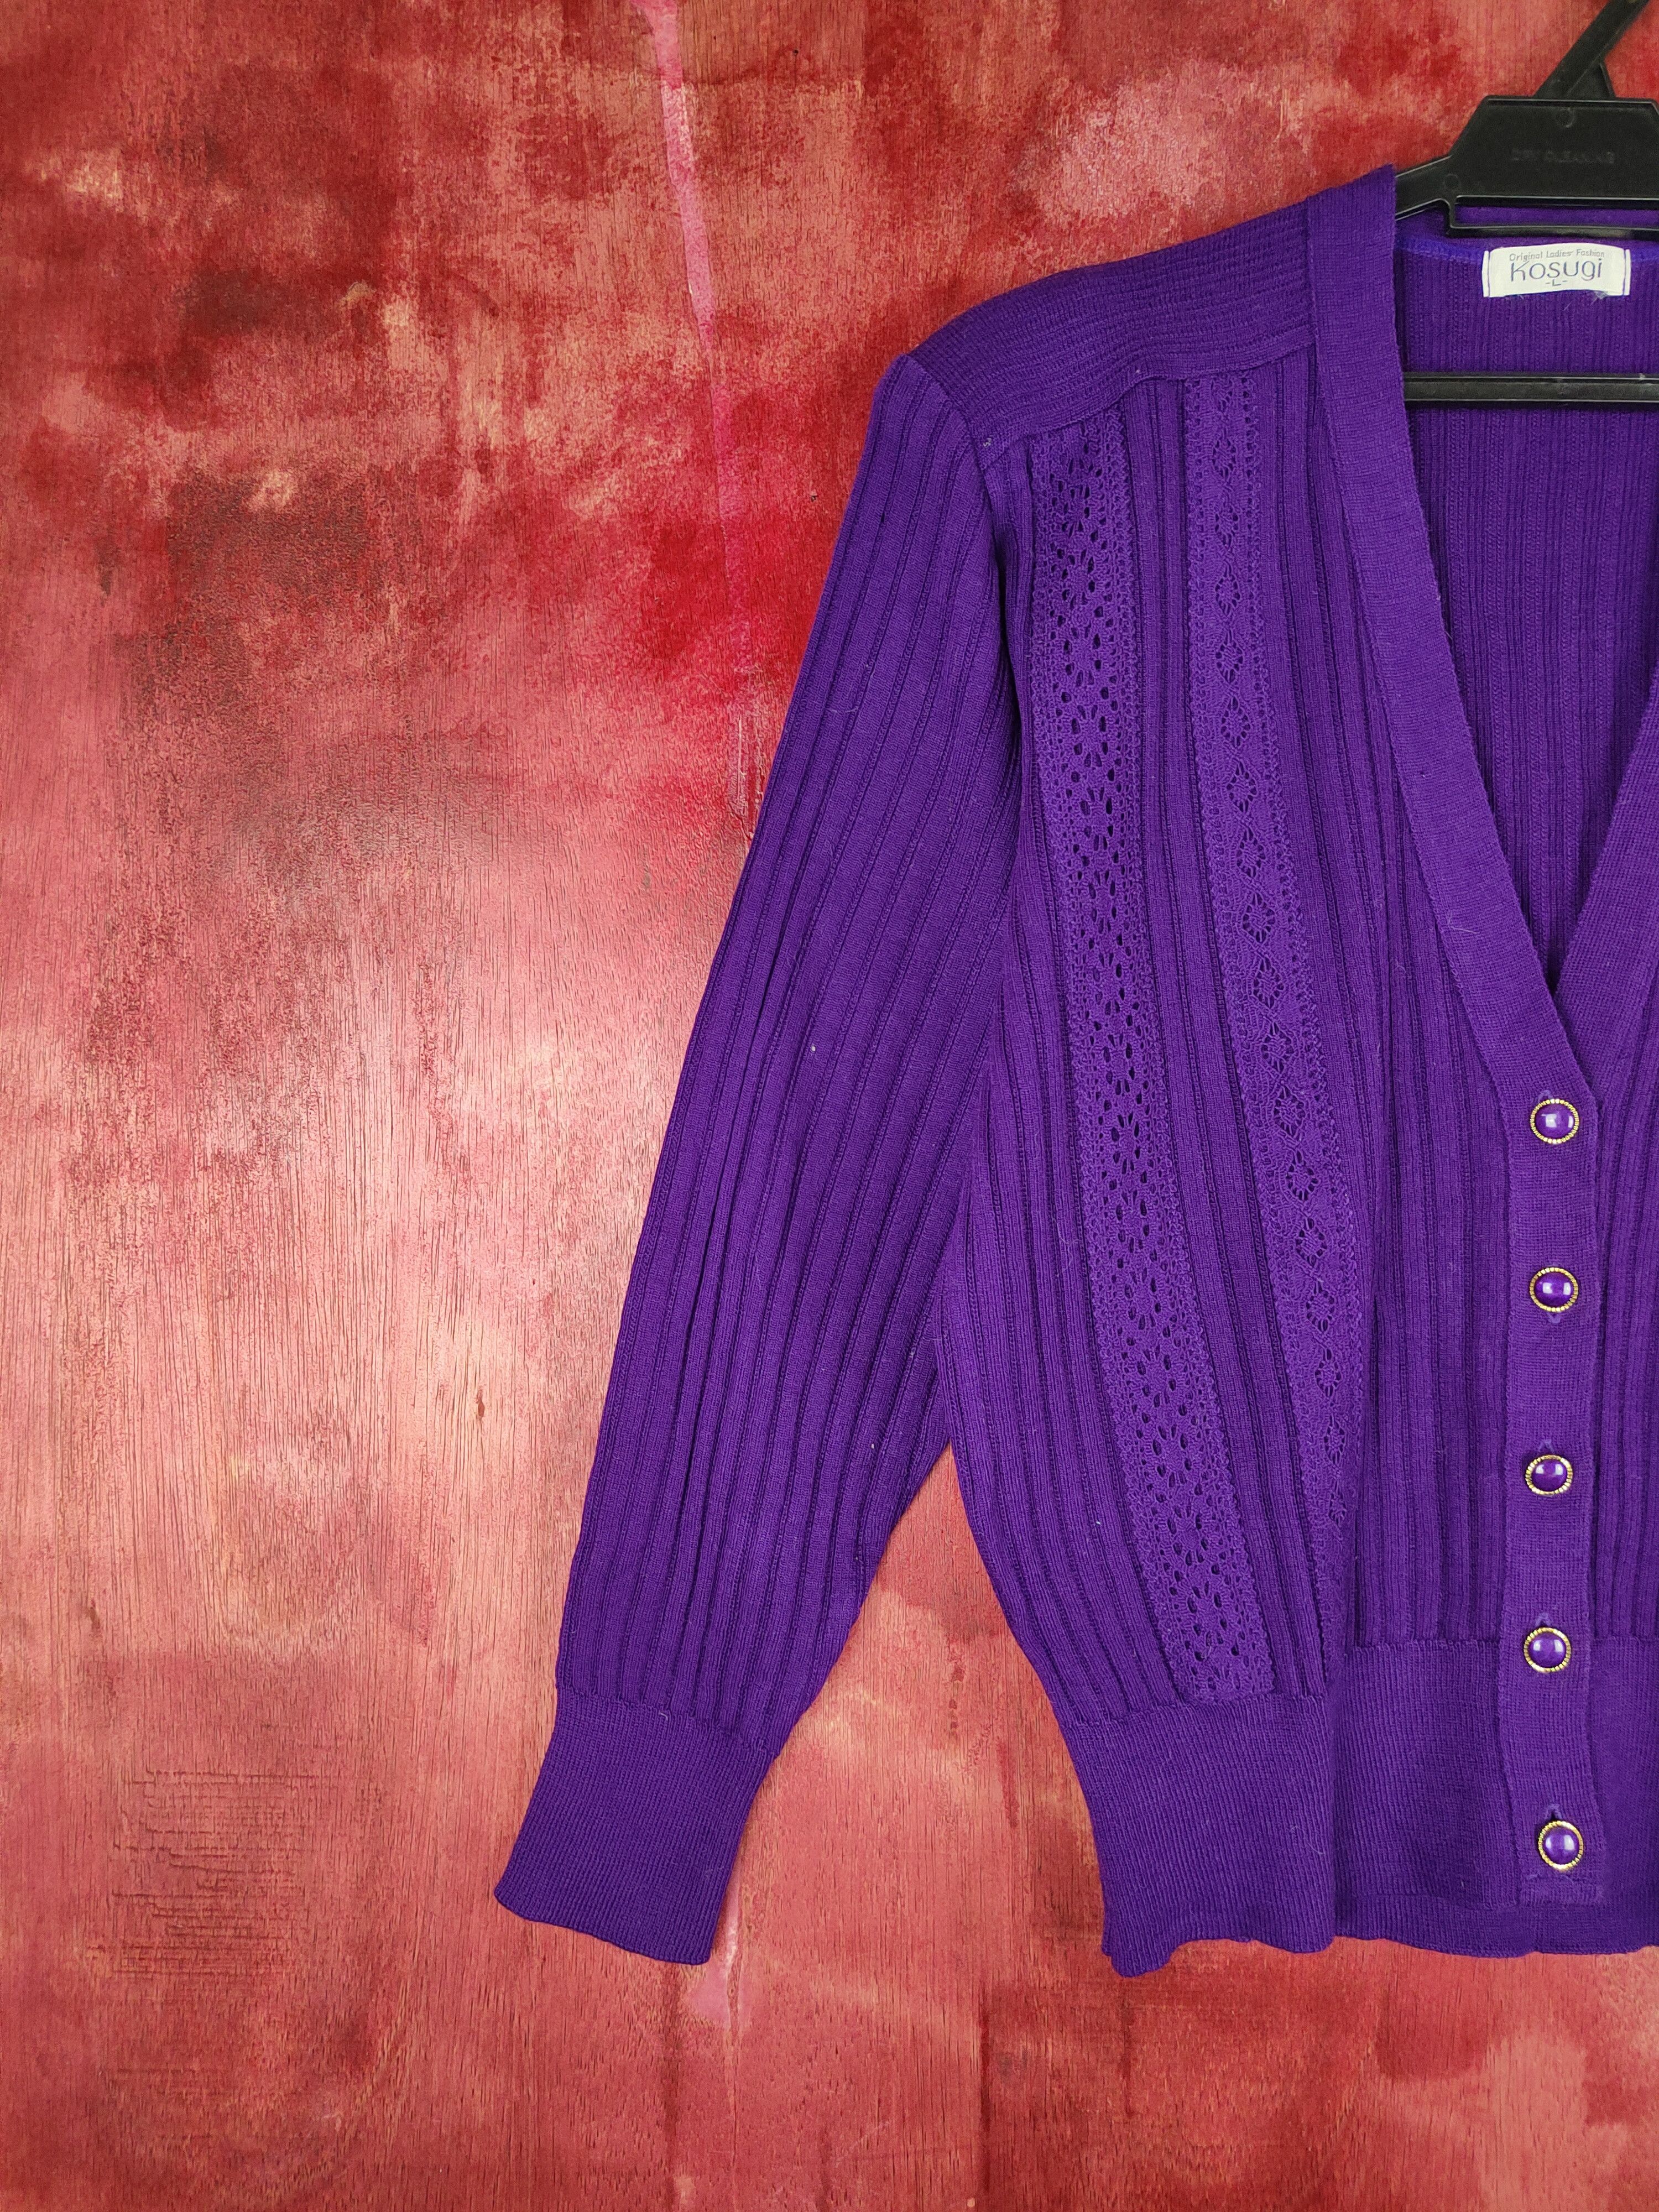 Japanese Brand Kosugi Purple Knitwear Cardigan Crop Tops Size L / US 10 / IT 46 - 3 Thumbnail